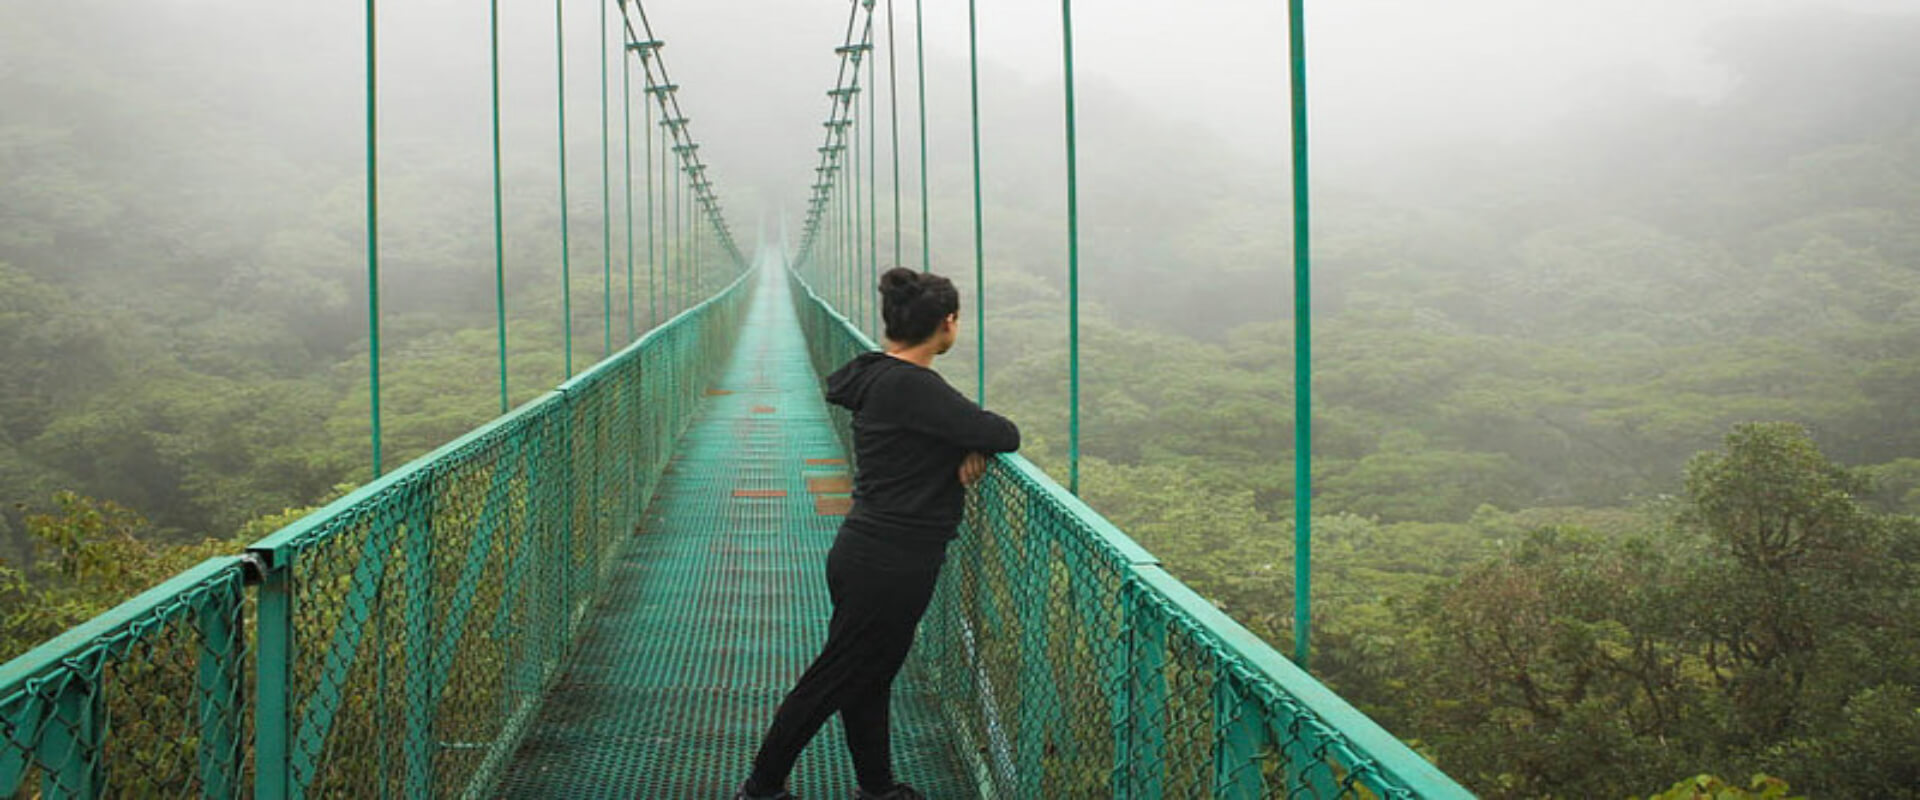 Tirolesa, puentes colgantes y mariposas | Costa Rica Jade Tours